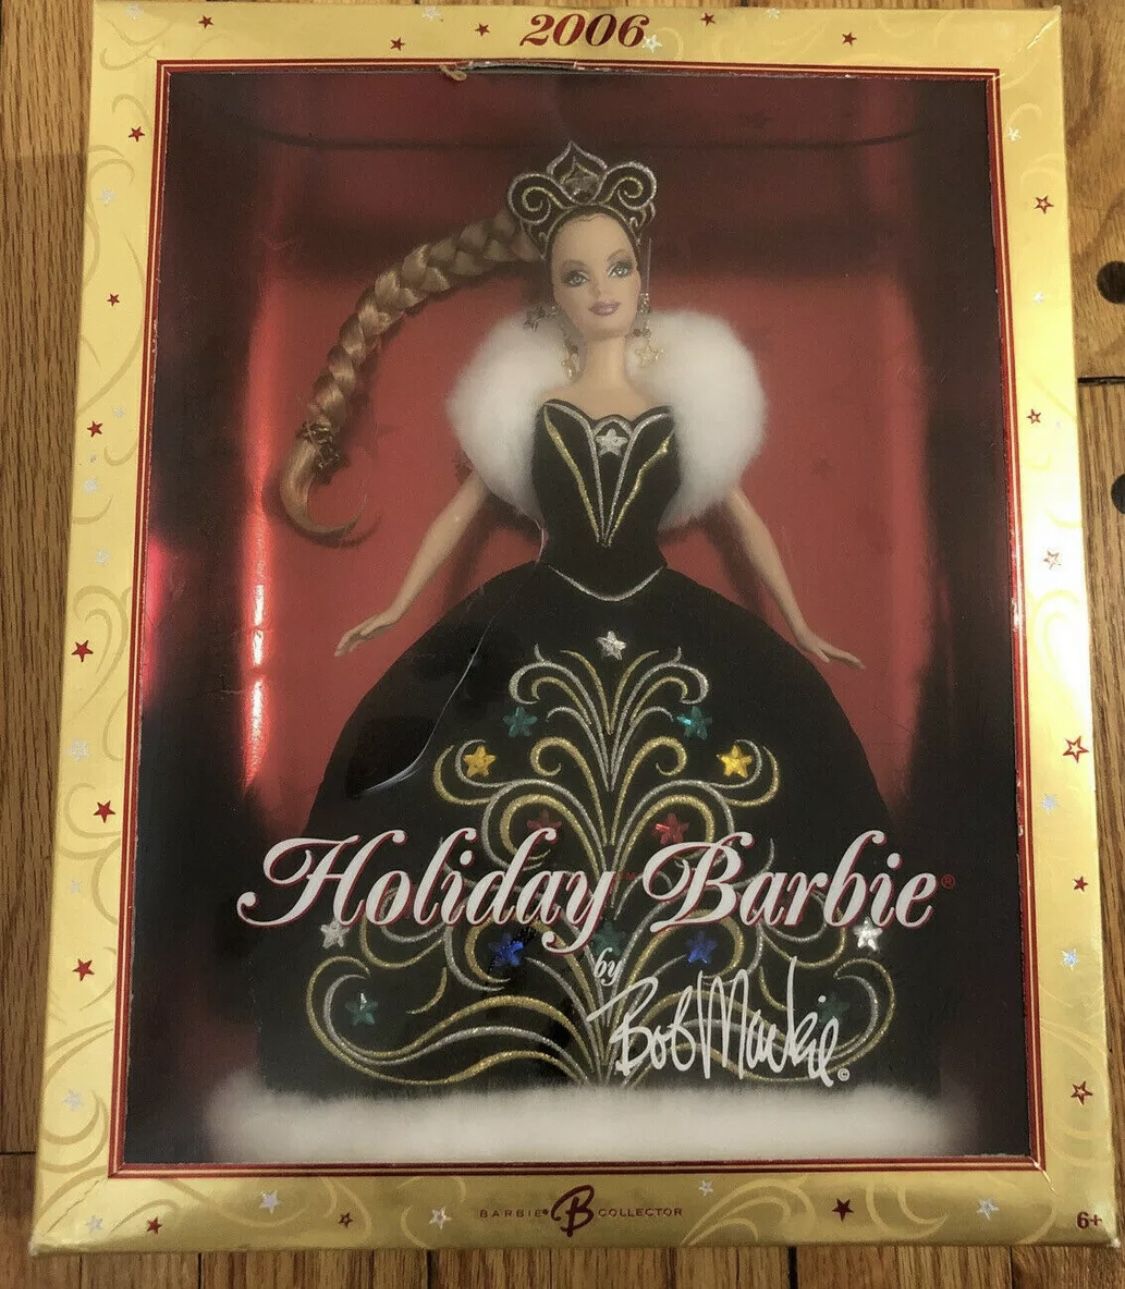 New MISB Mattel Holiday Barbie 2006 Bob Mackie Special Edition